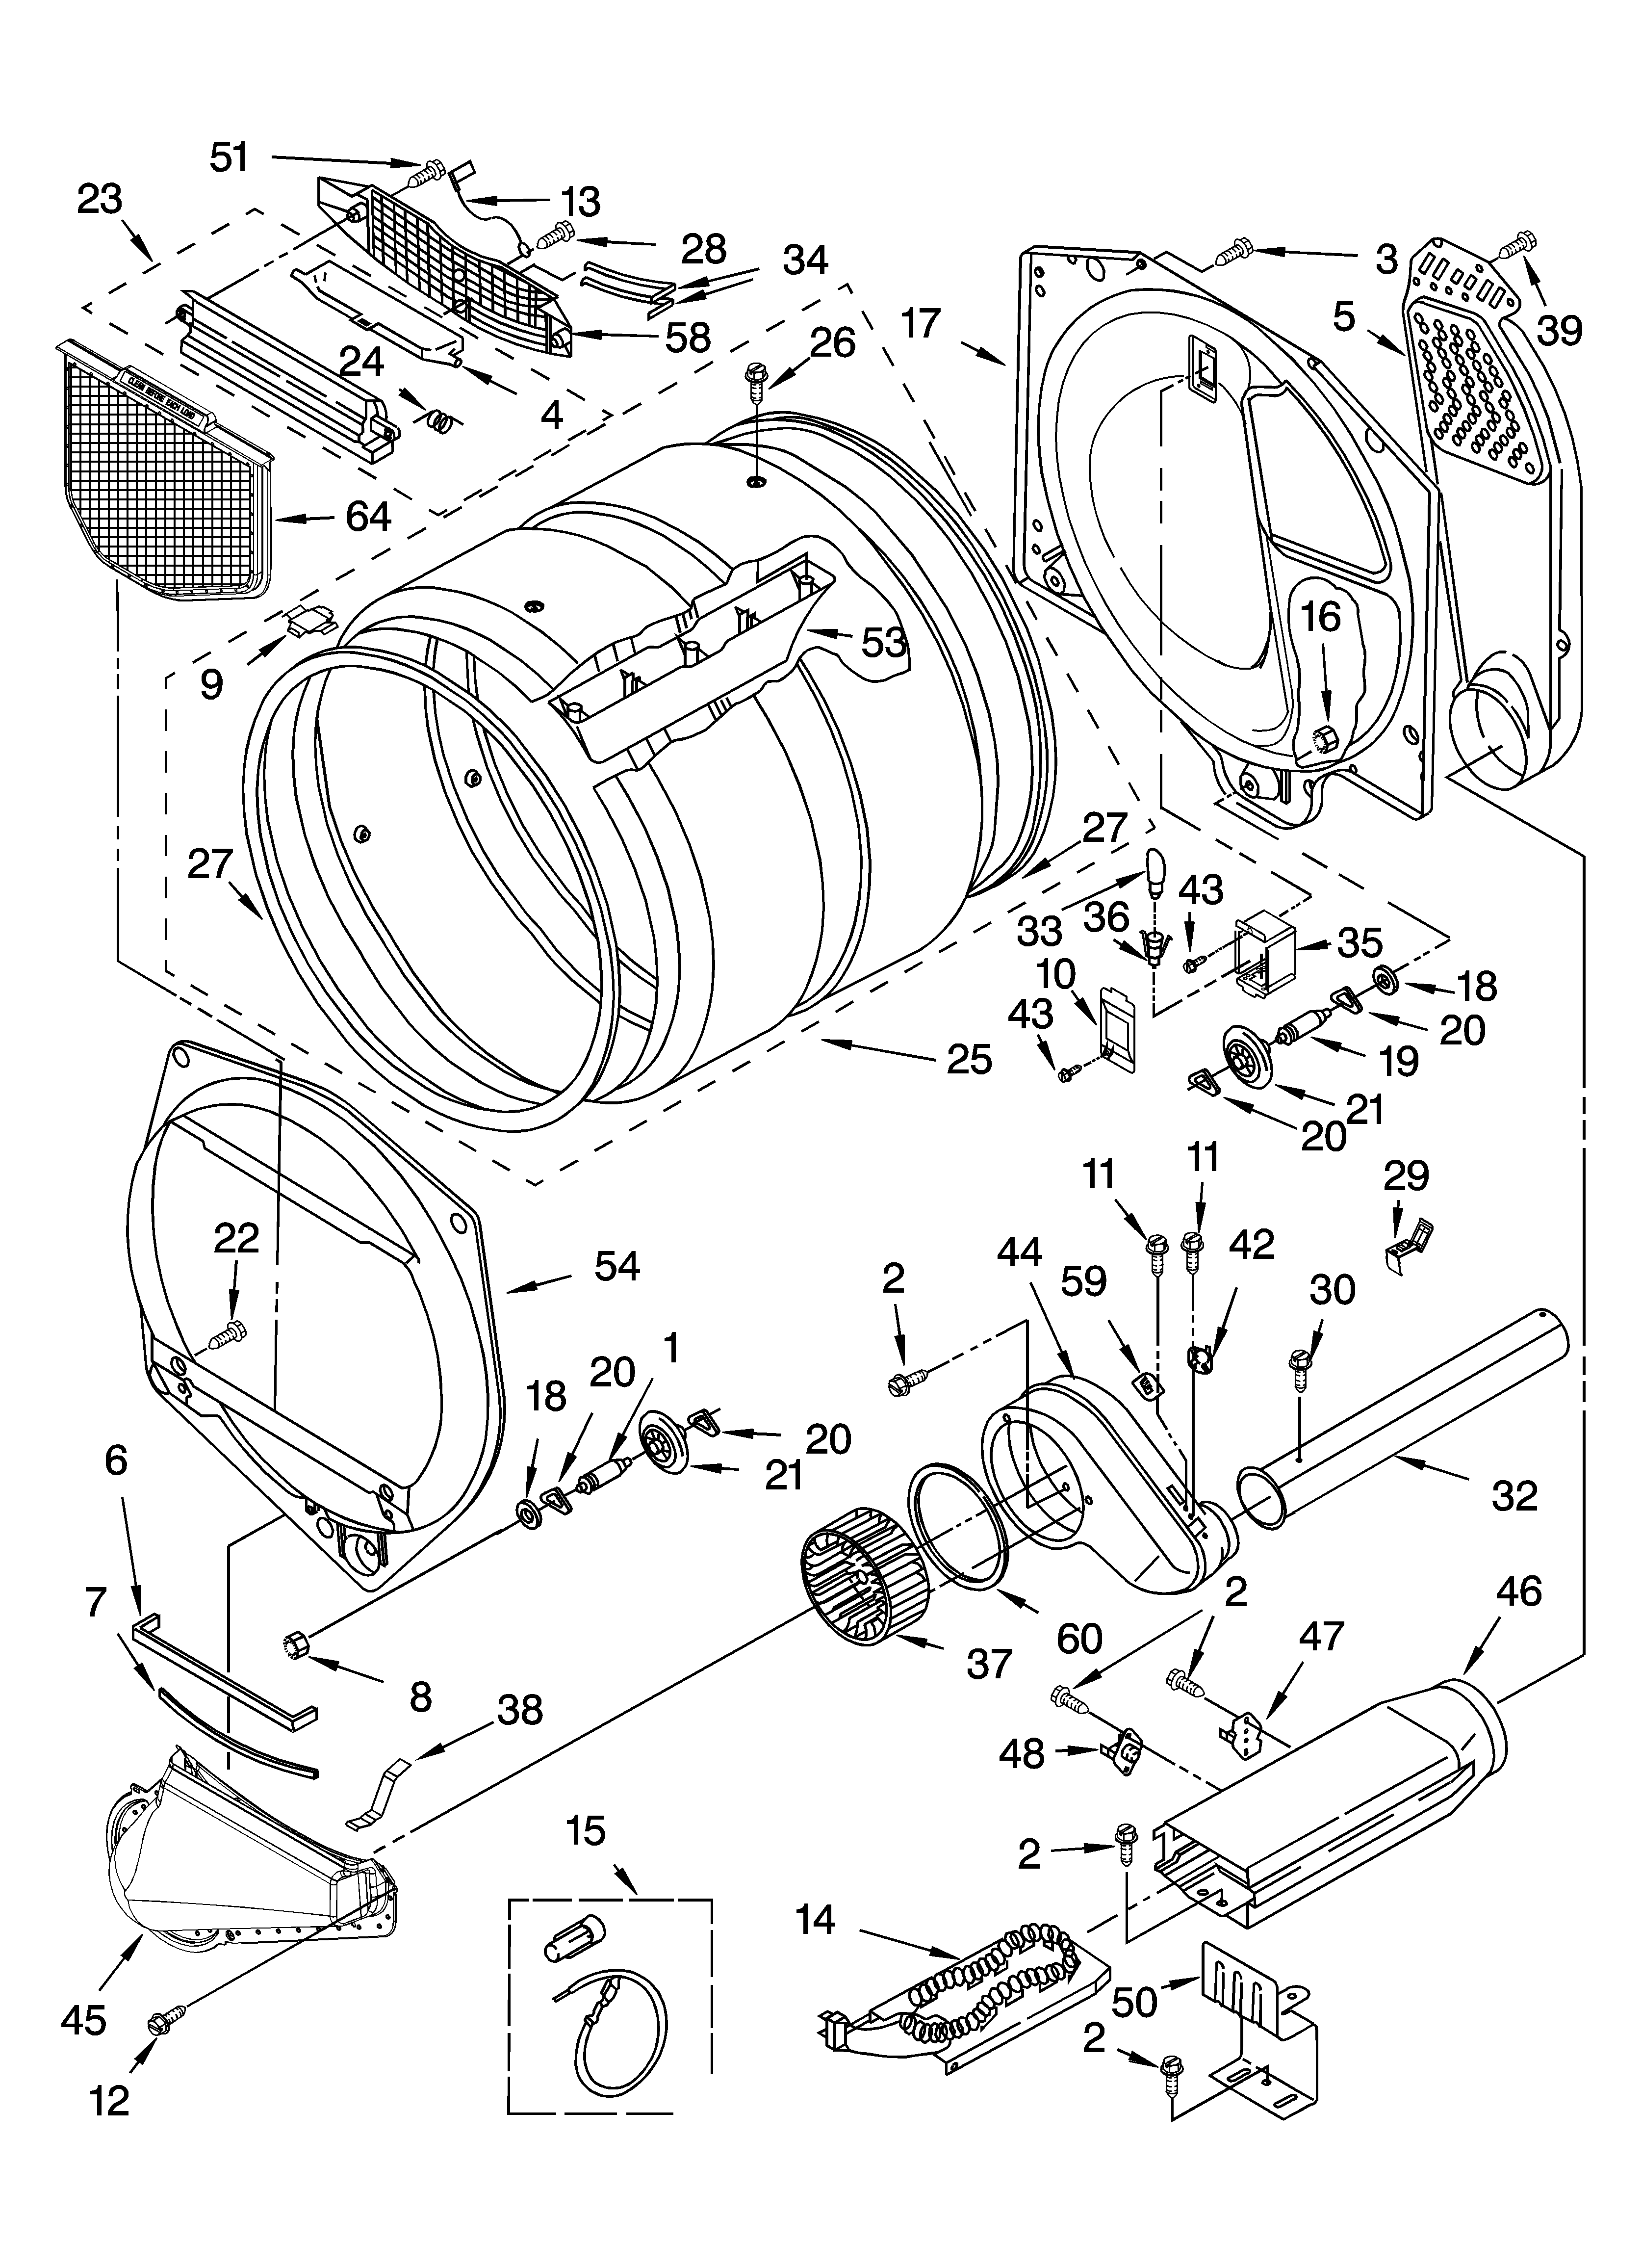 Wiring Diagram Database  Kenmore Elite Dryer Parts Diagram